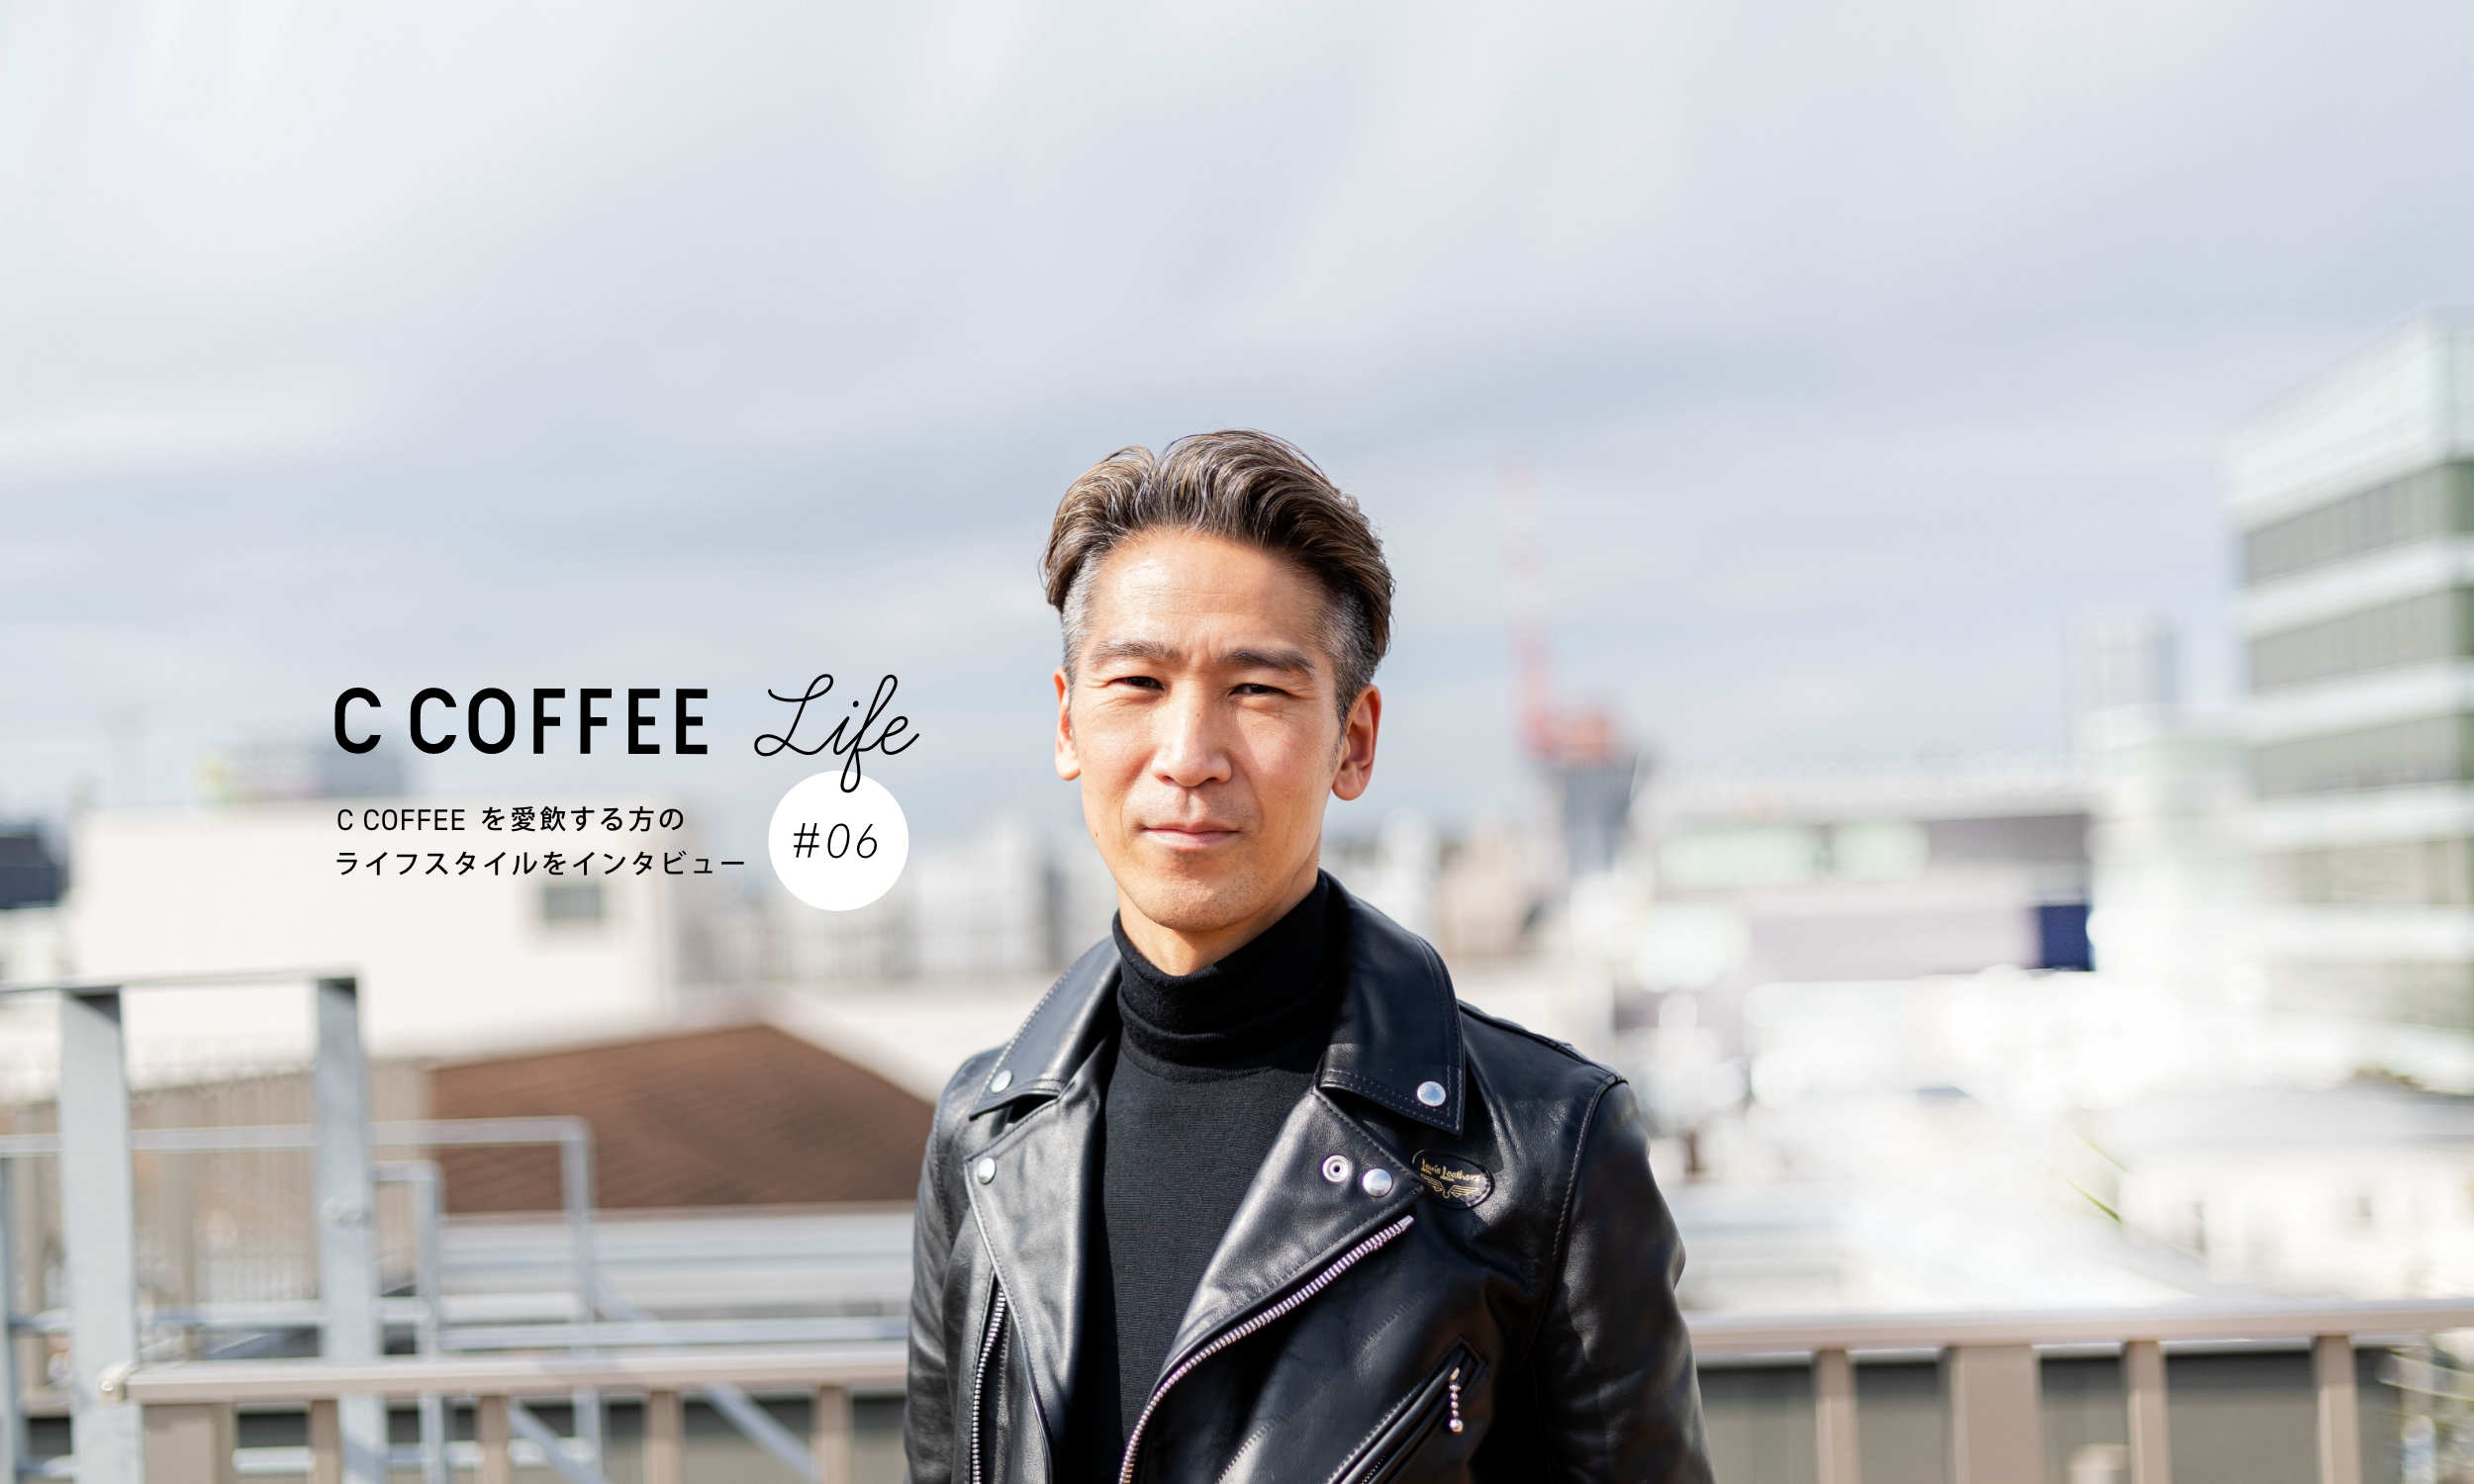 C COFFEE Life  #06  映像ディレクター 安田 暁さん